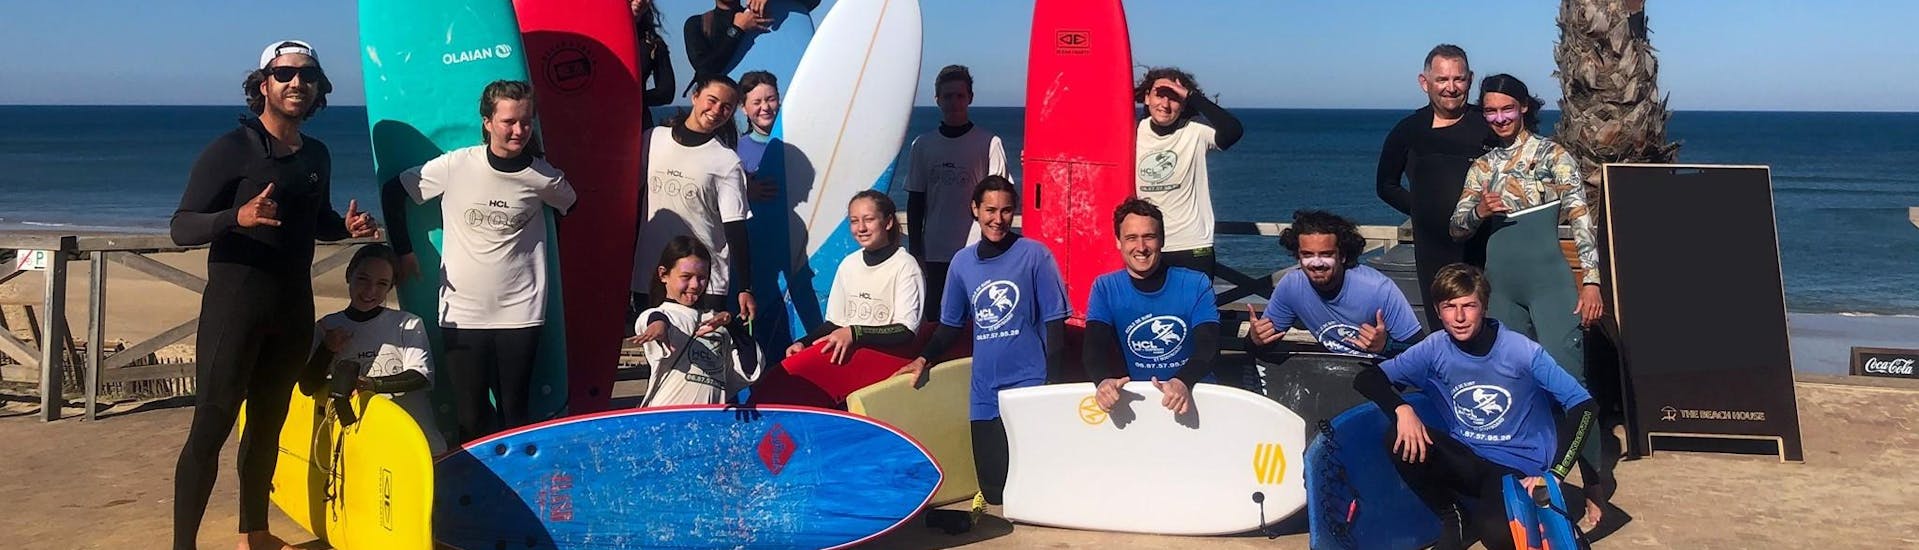 Group during their surf lessons on Lacanau Beach with HCL Lacanau.  